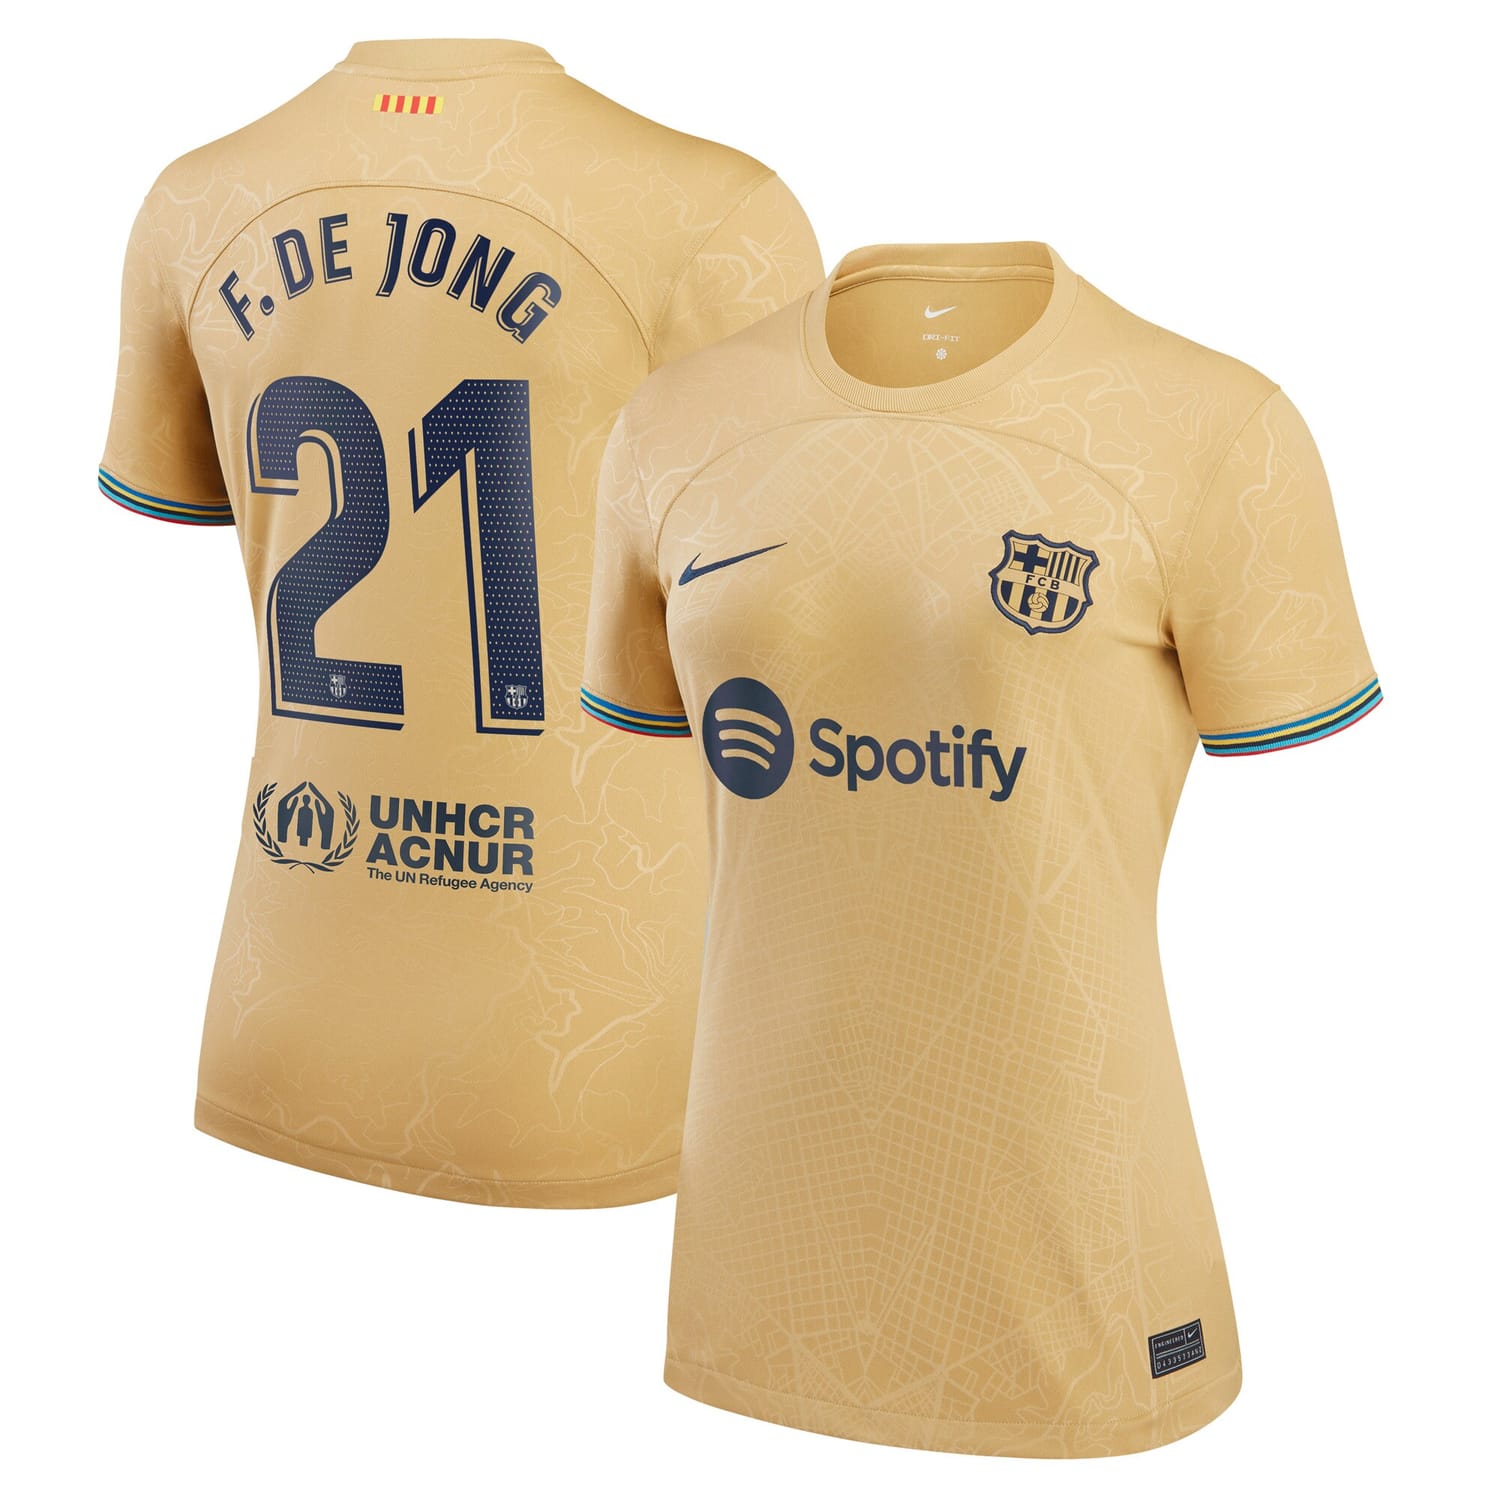 La Liga Barcelona Away Jersey Shirt Yellow 2022-23 player Frenkie de Jong printing for Women